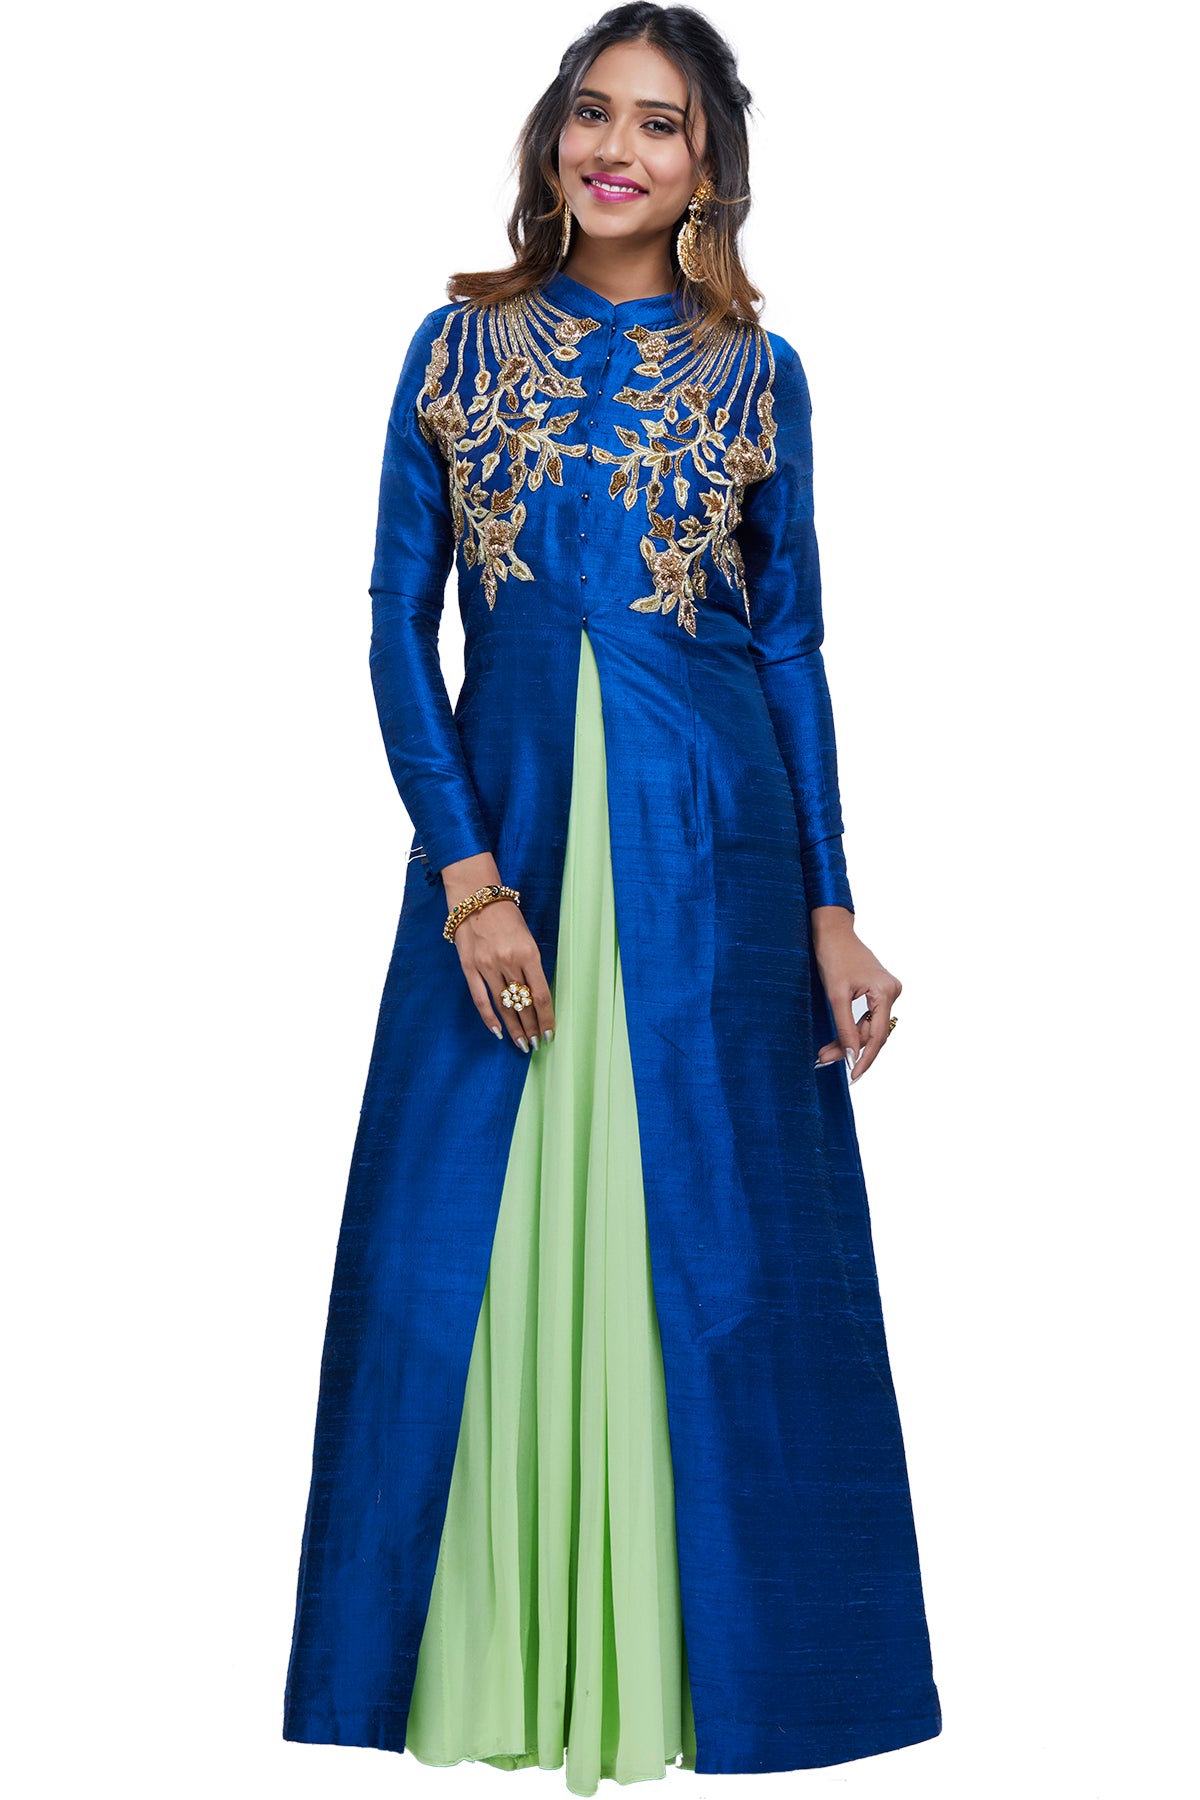 New Tahari s levine blue green beaded dress jacket mother bride wedding  Guest 8 | eBay